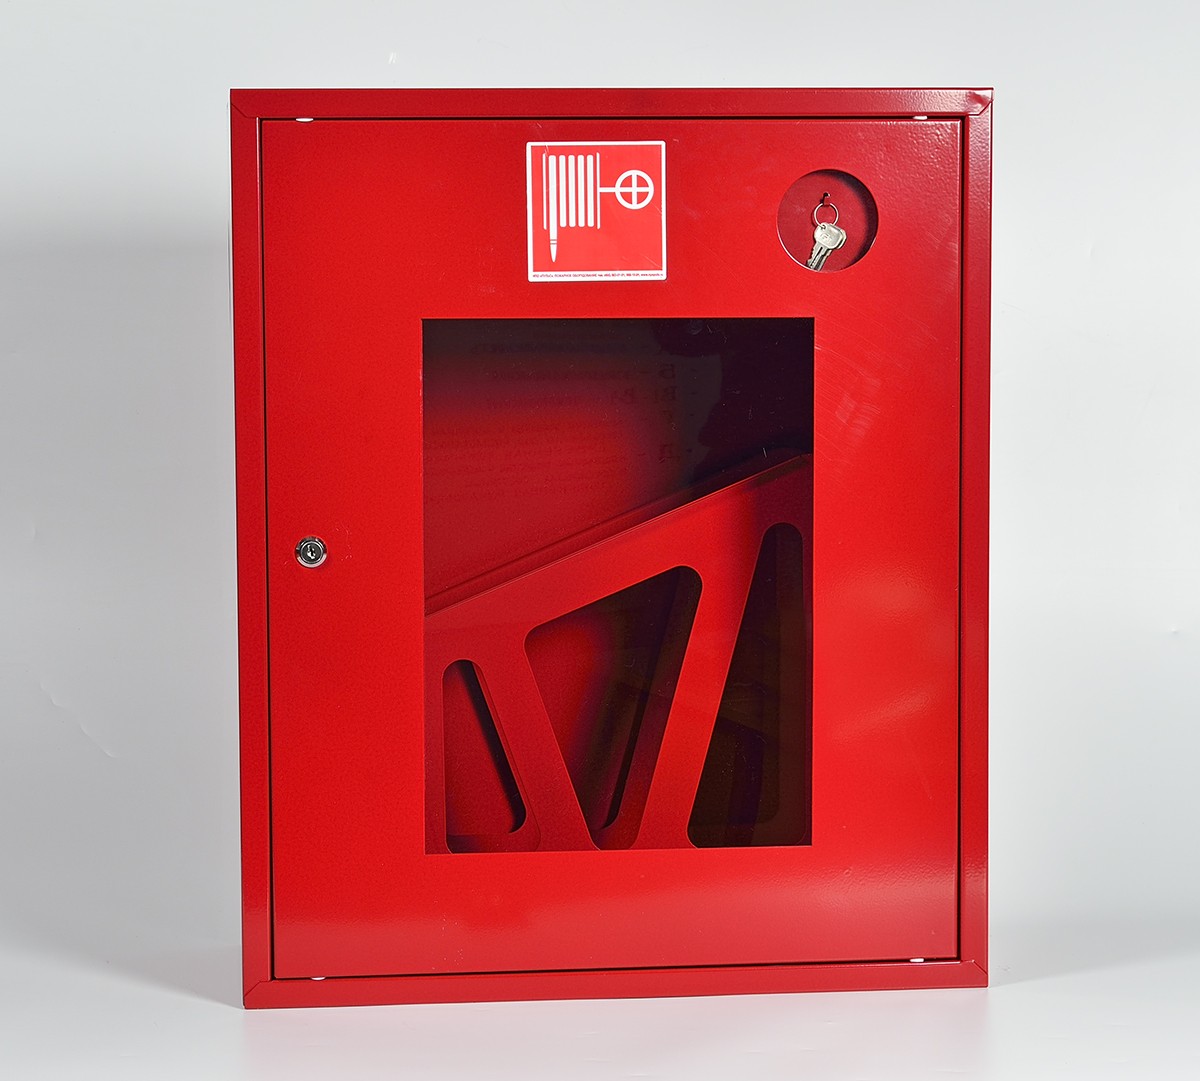 Fire cabinet SHPK-310 NOK